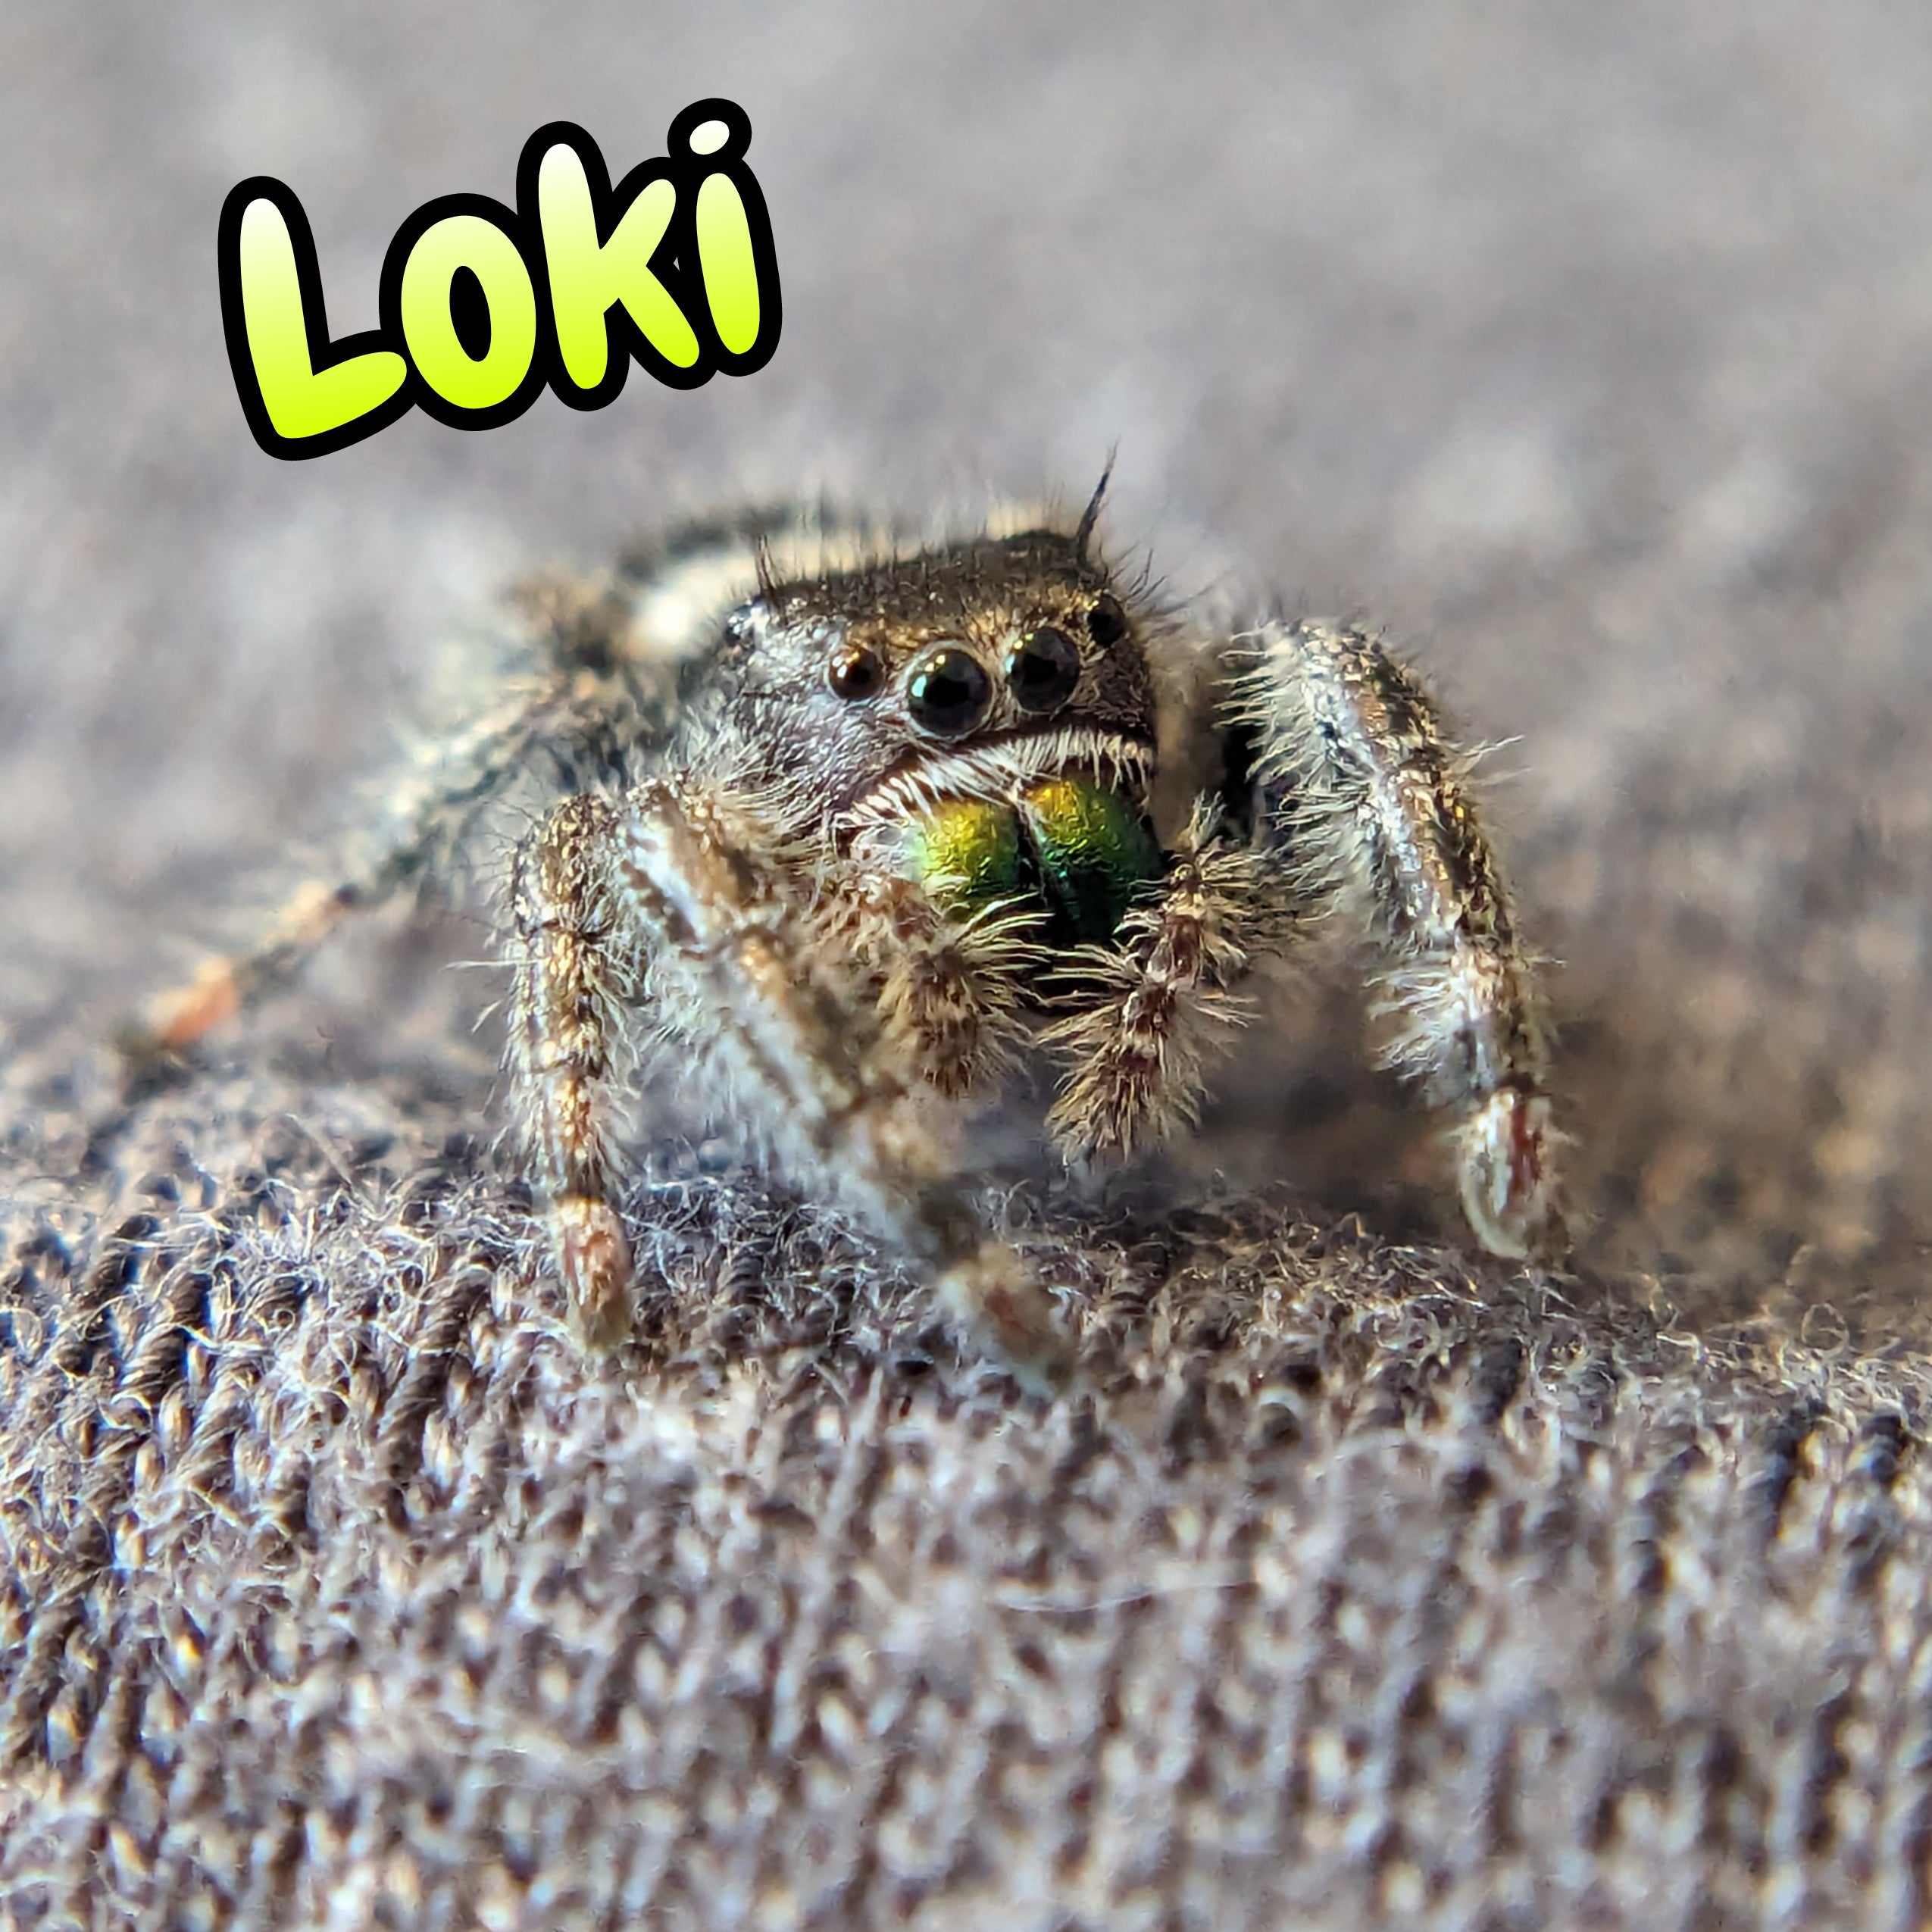 Audax Jumping Spider "Loki"